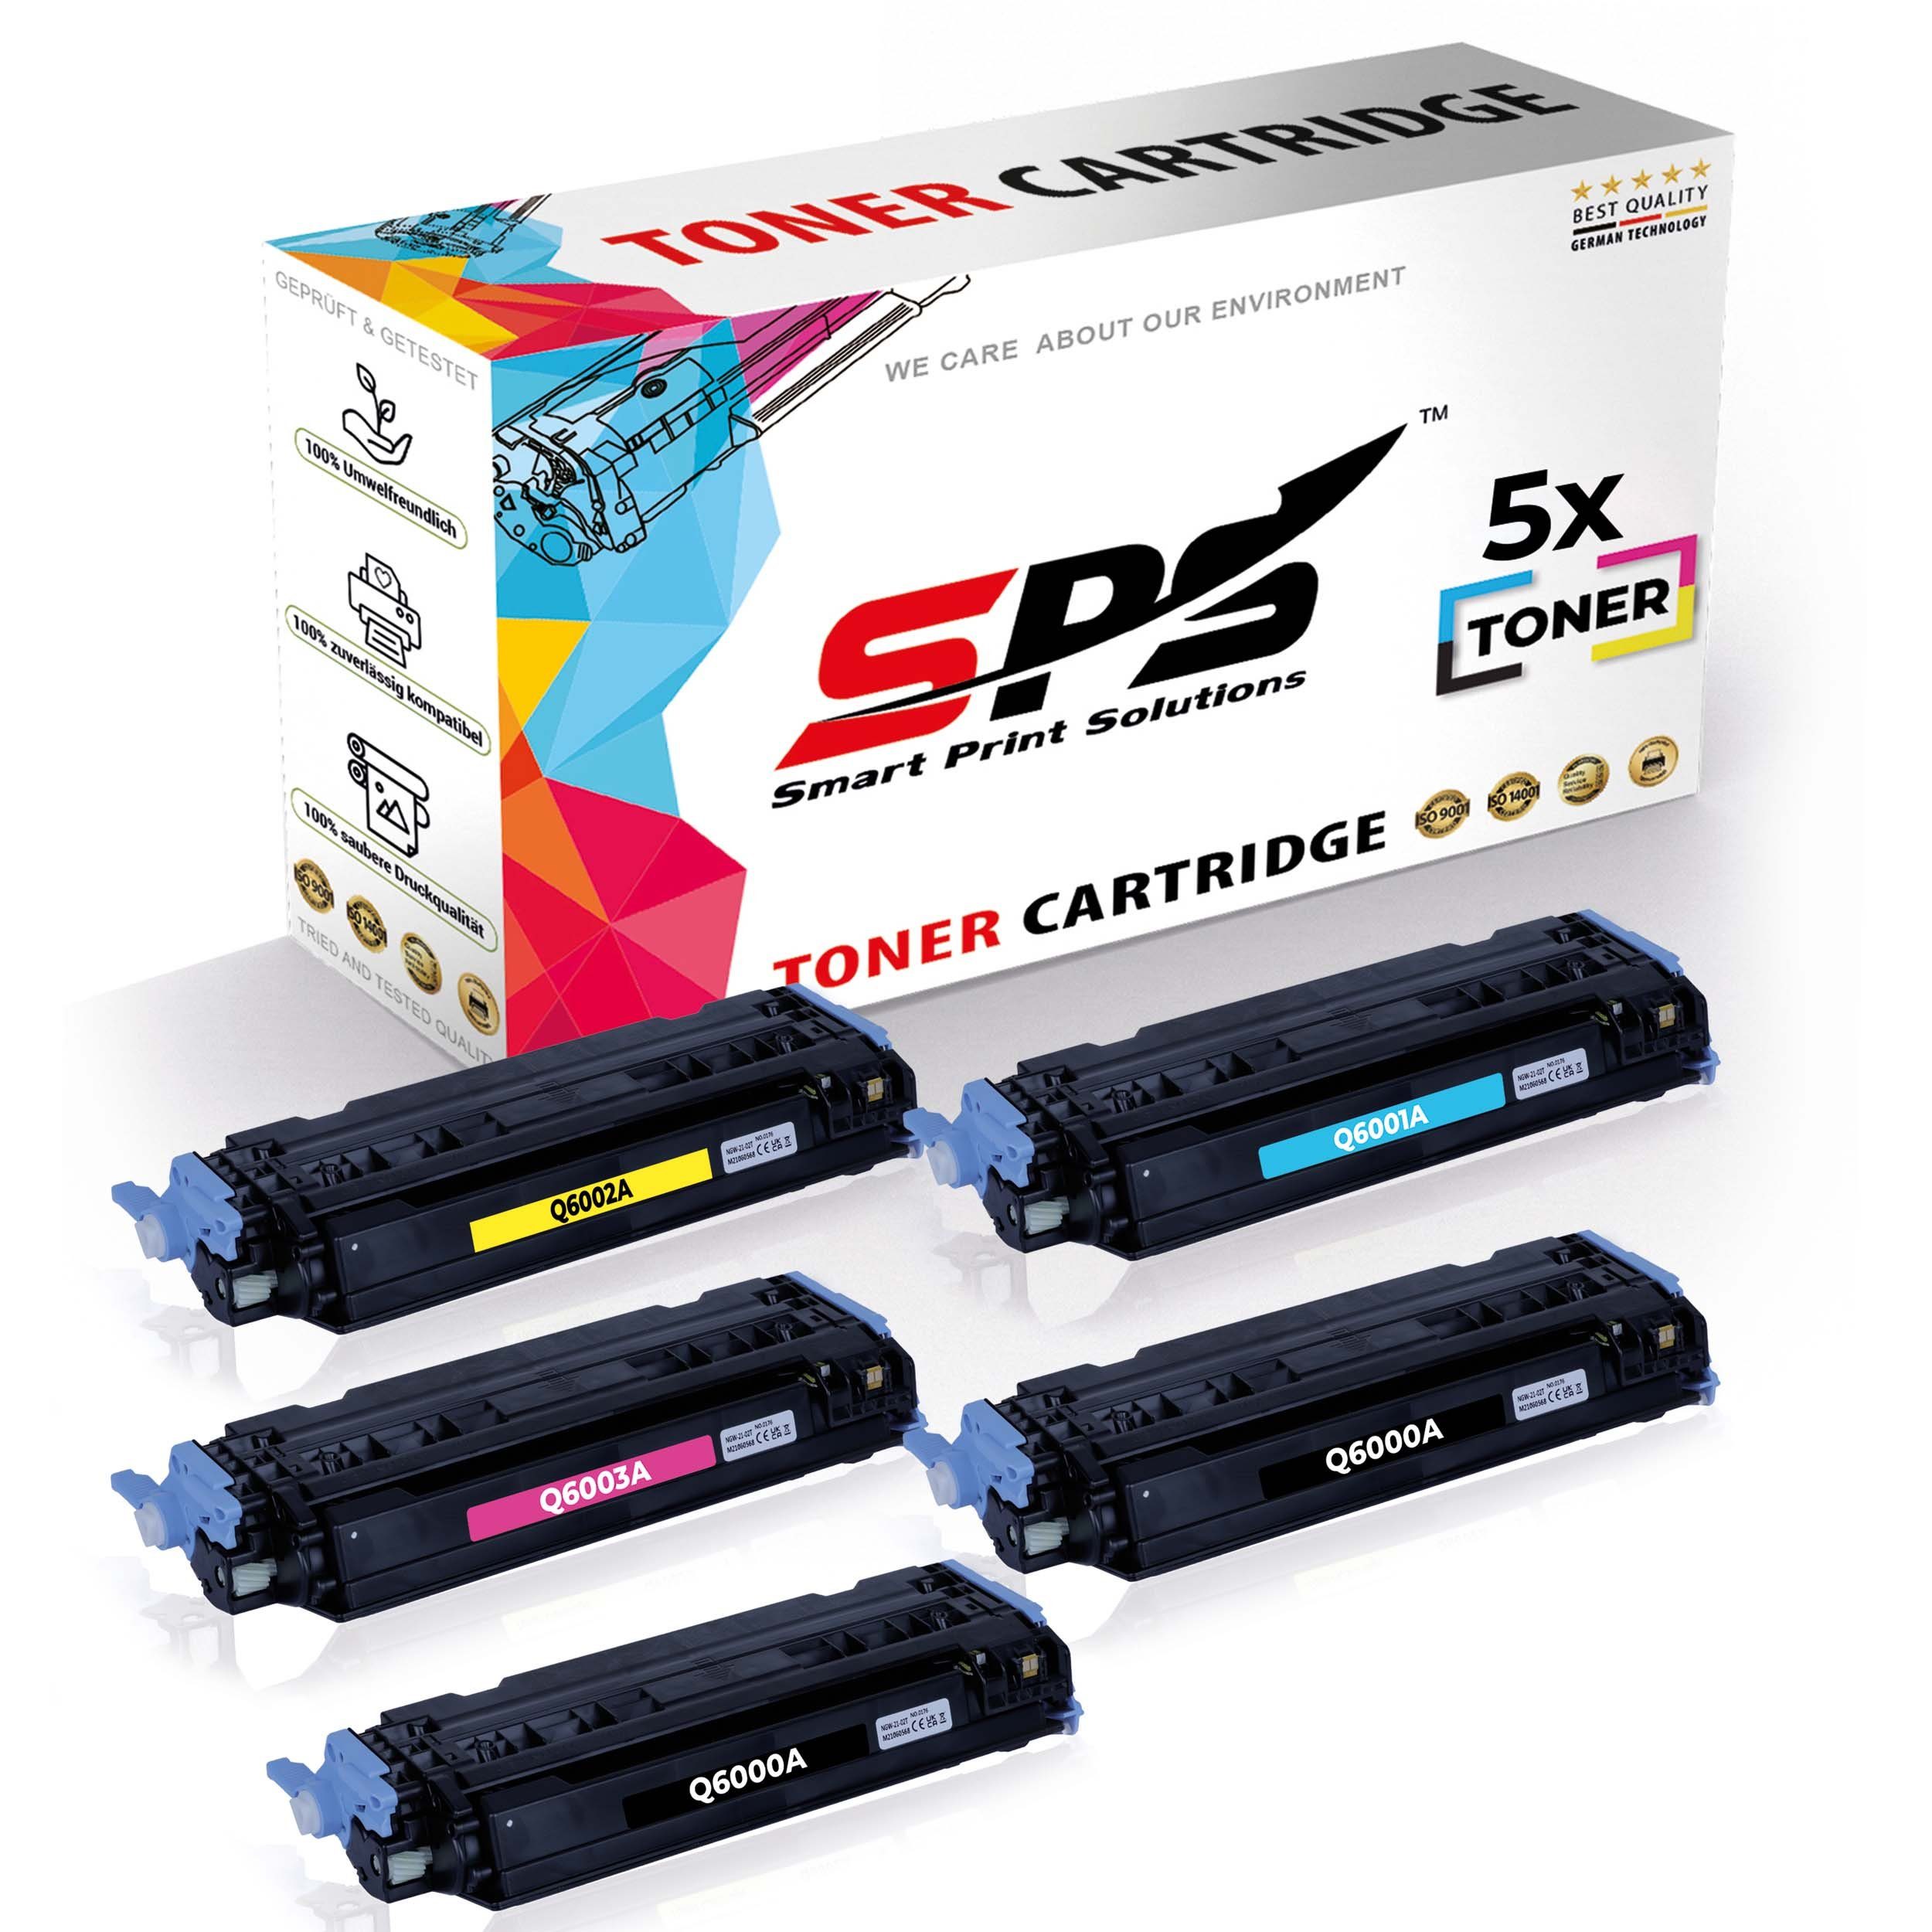 SPS Tonerkartusche 5x Multipack Set Kompatibel für HP Color Laserjet 2600 LN (124A/Q6001A, (5er Pack)